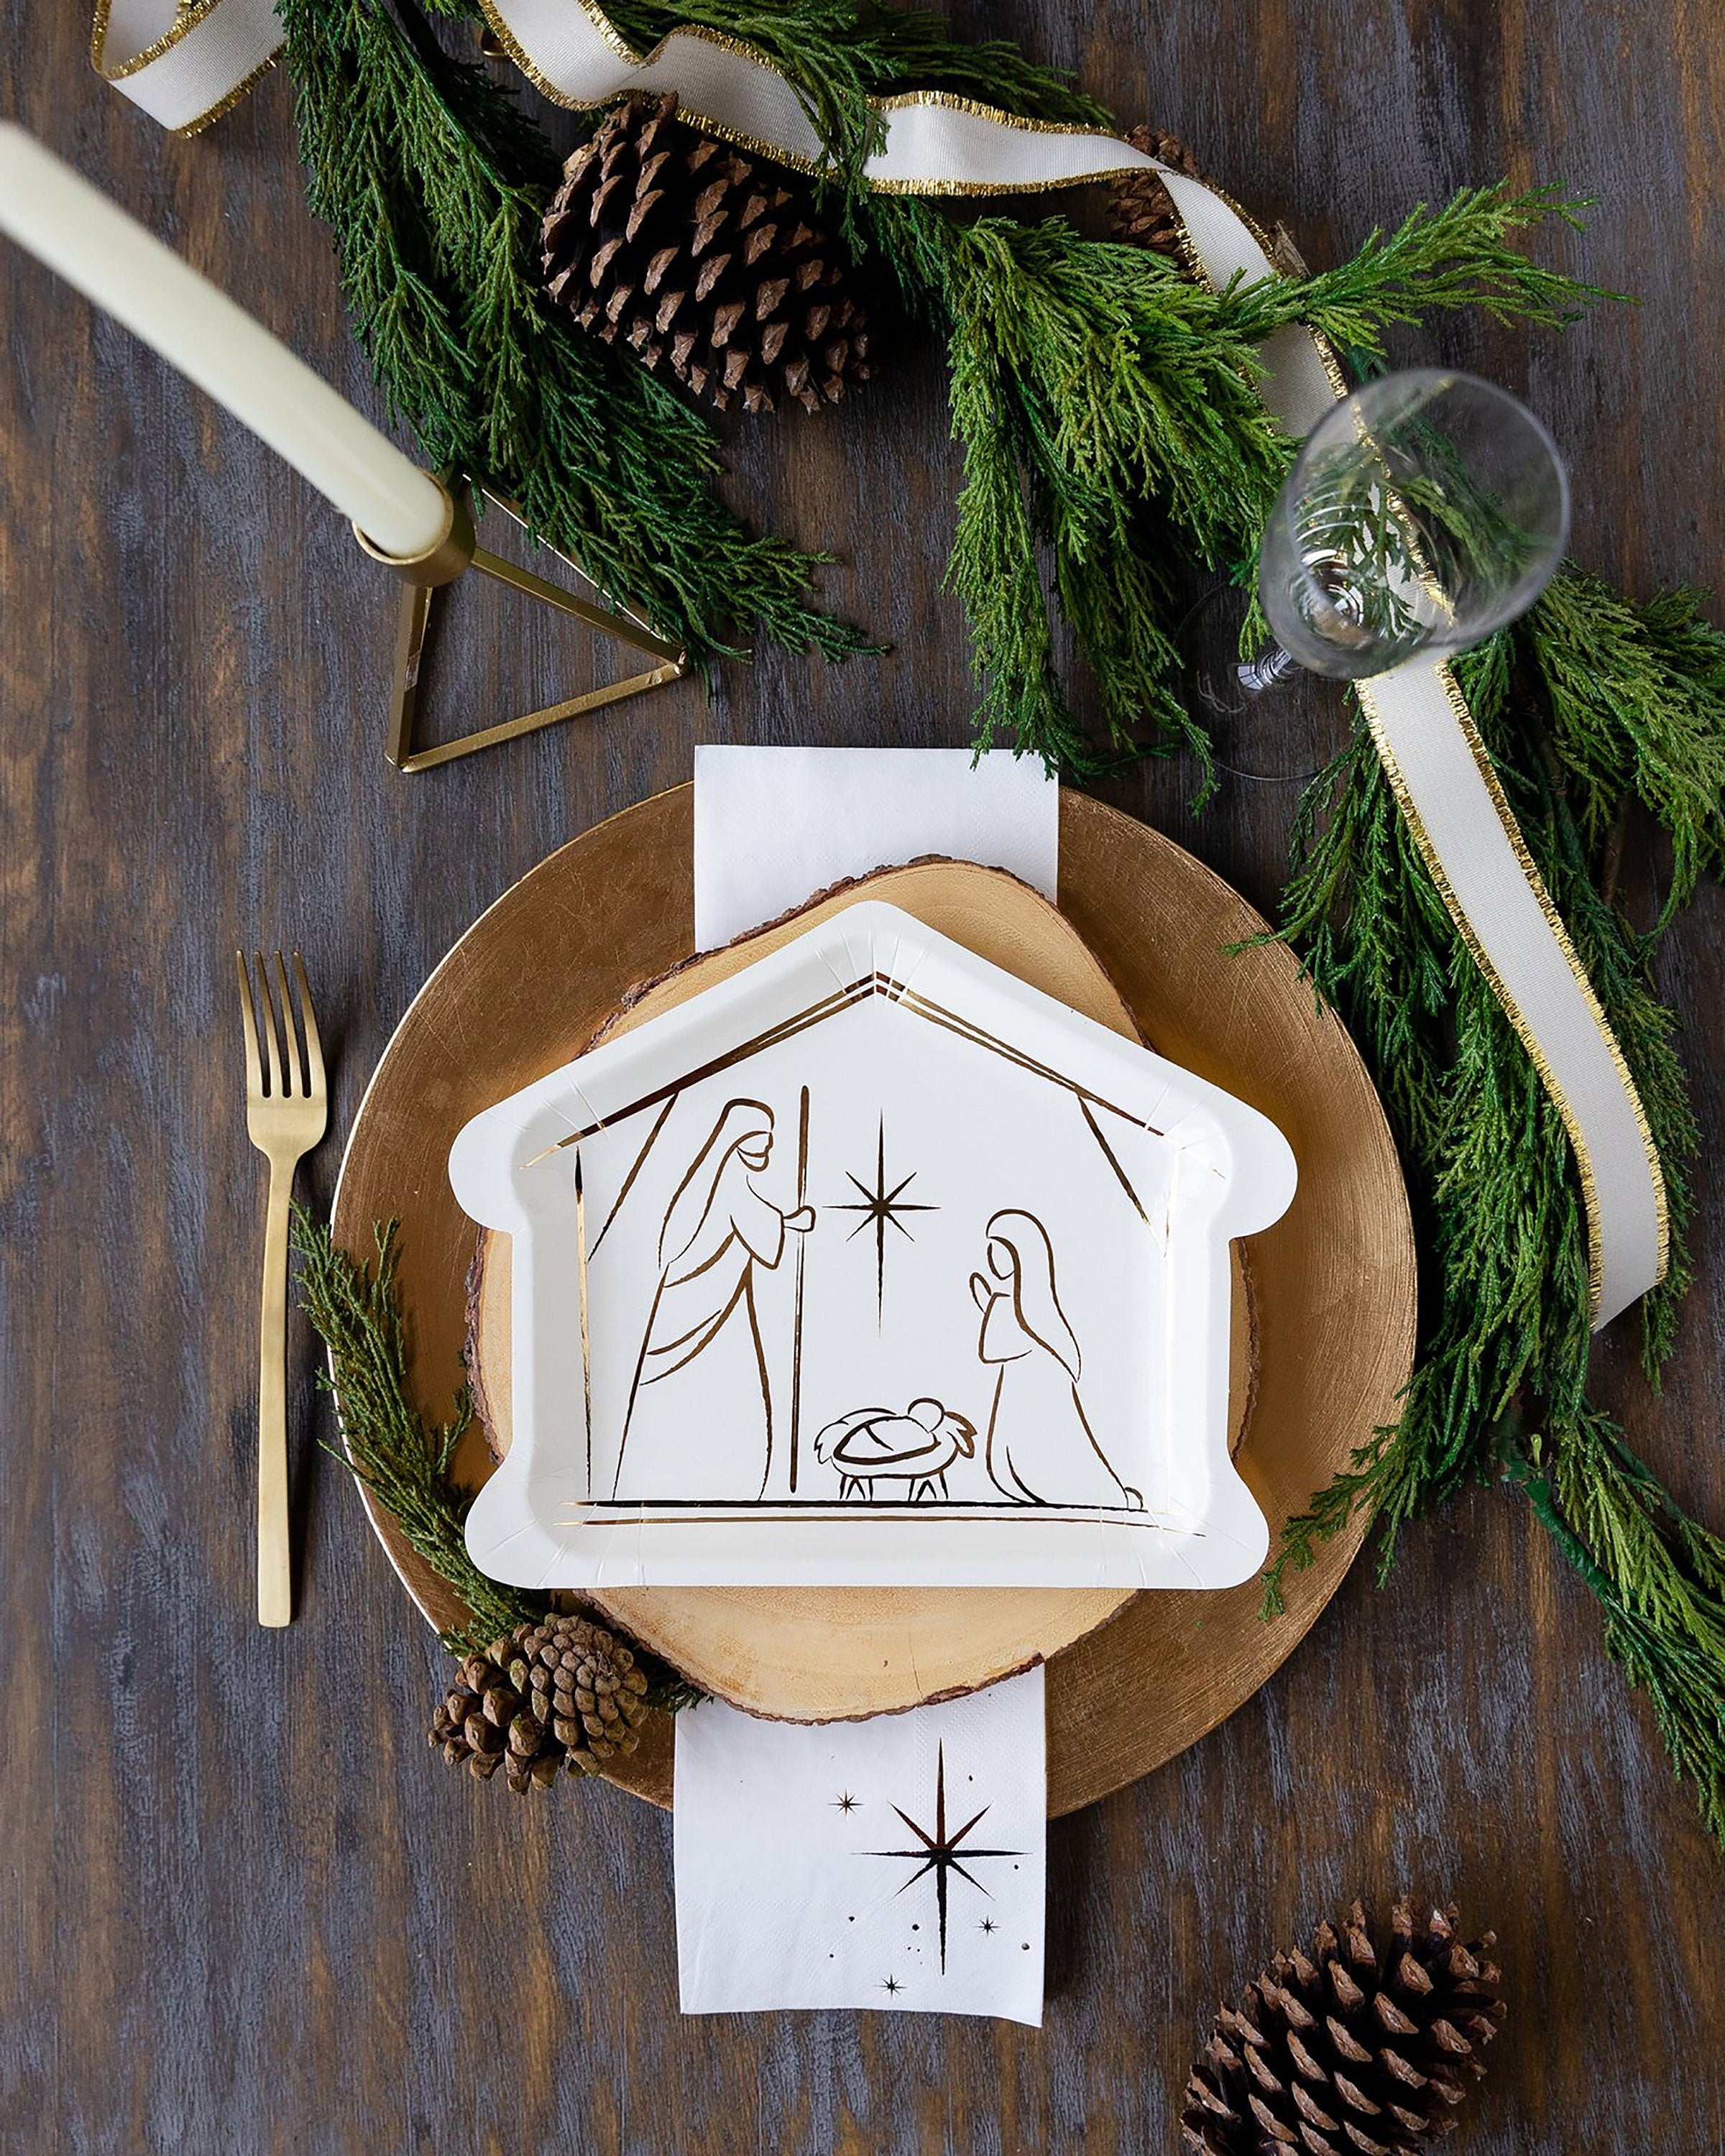 Nativity Plates | Christmas Paper Plates - Christmas Plates - Christmas Tableware - Disposable Christmas Plates - Nativity Decorations